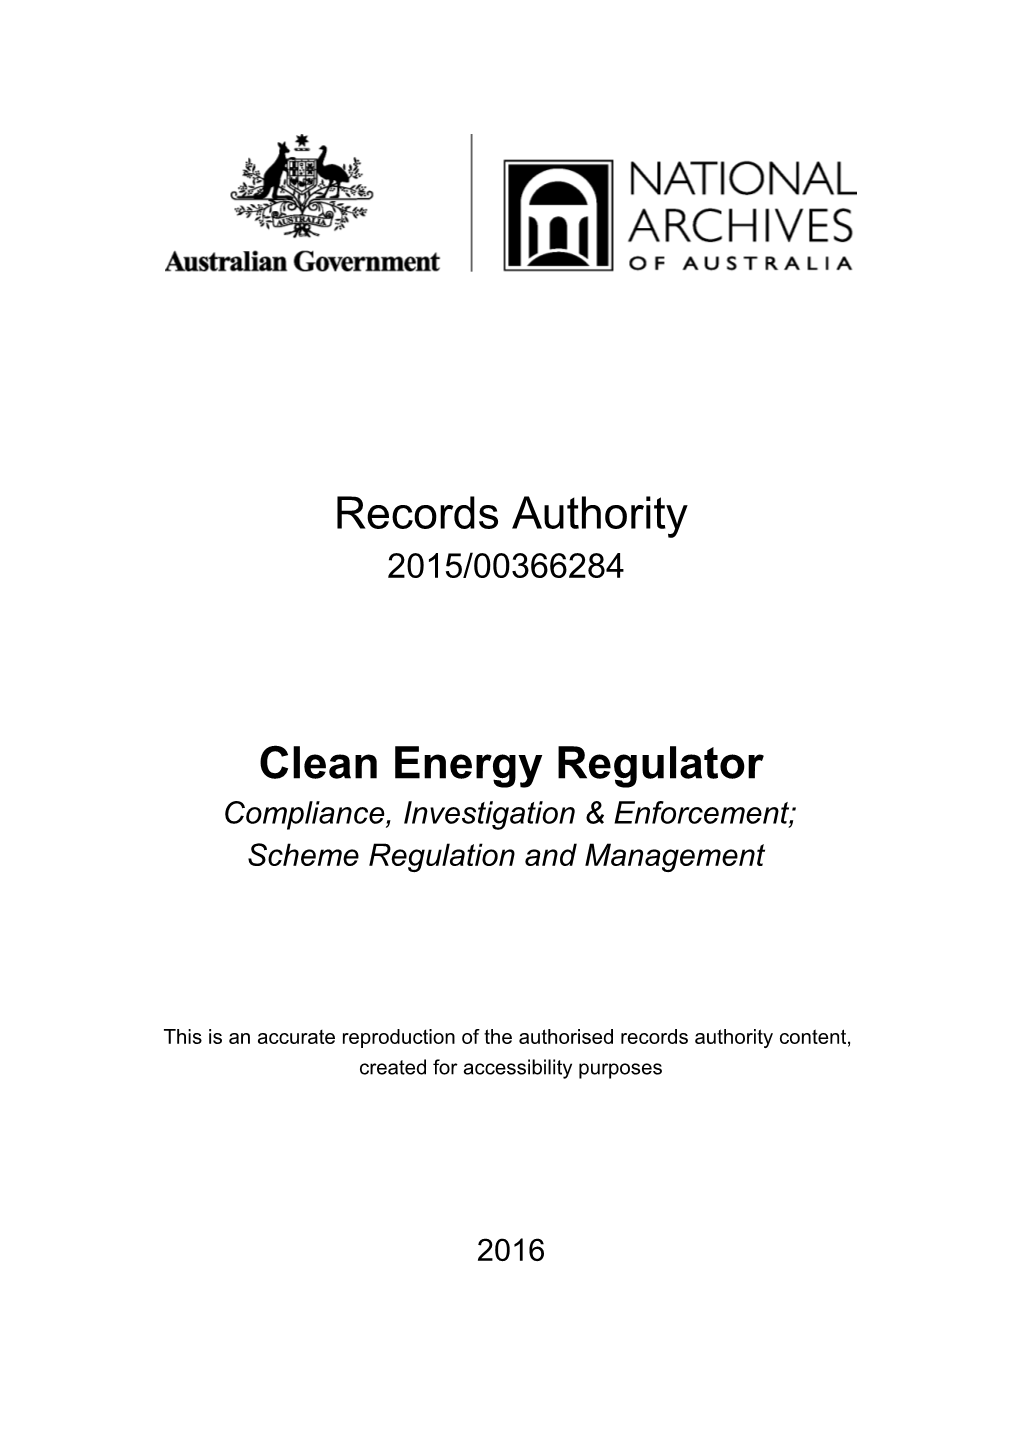 Clean Energy Regulator Records Authority 2015/00366284